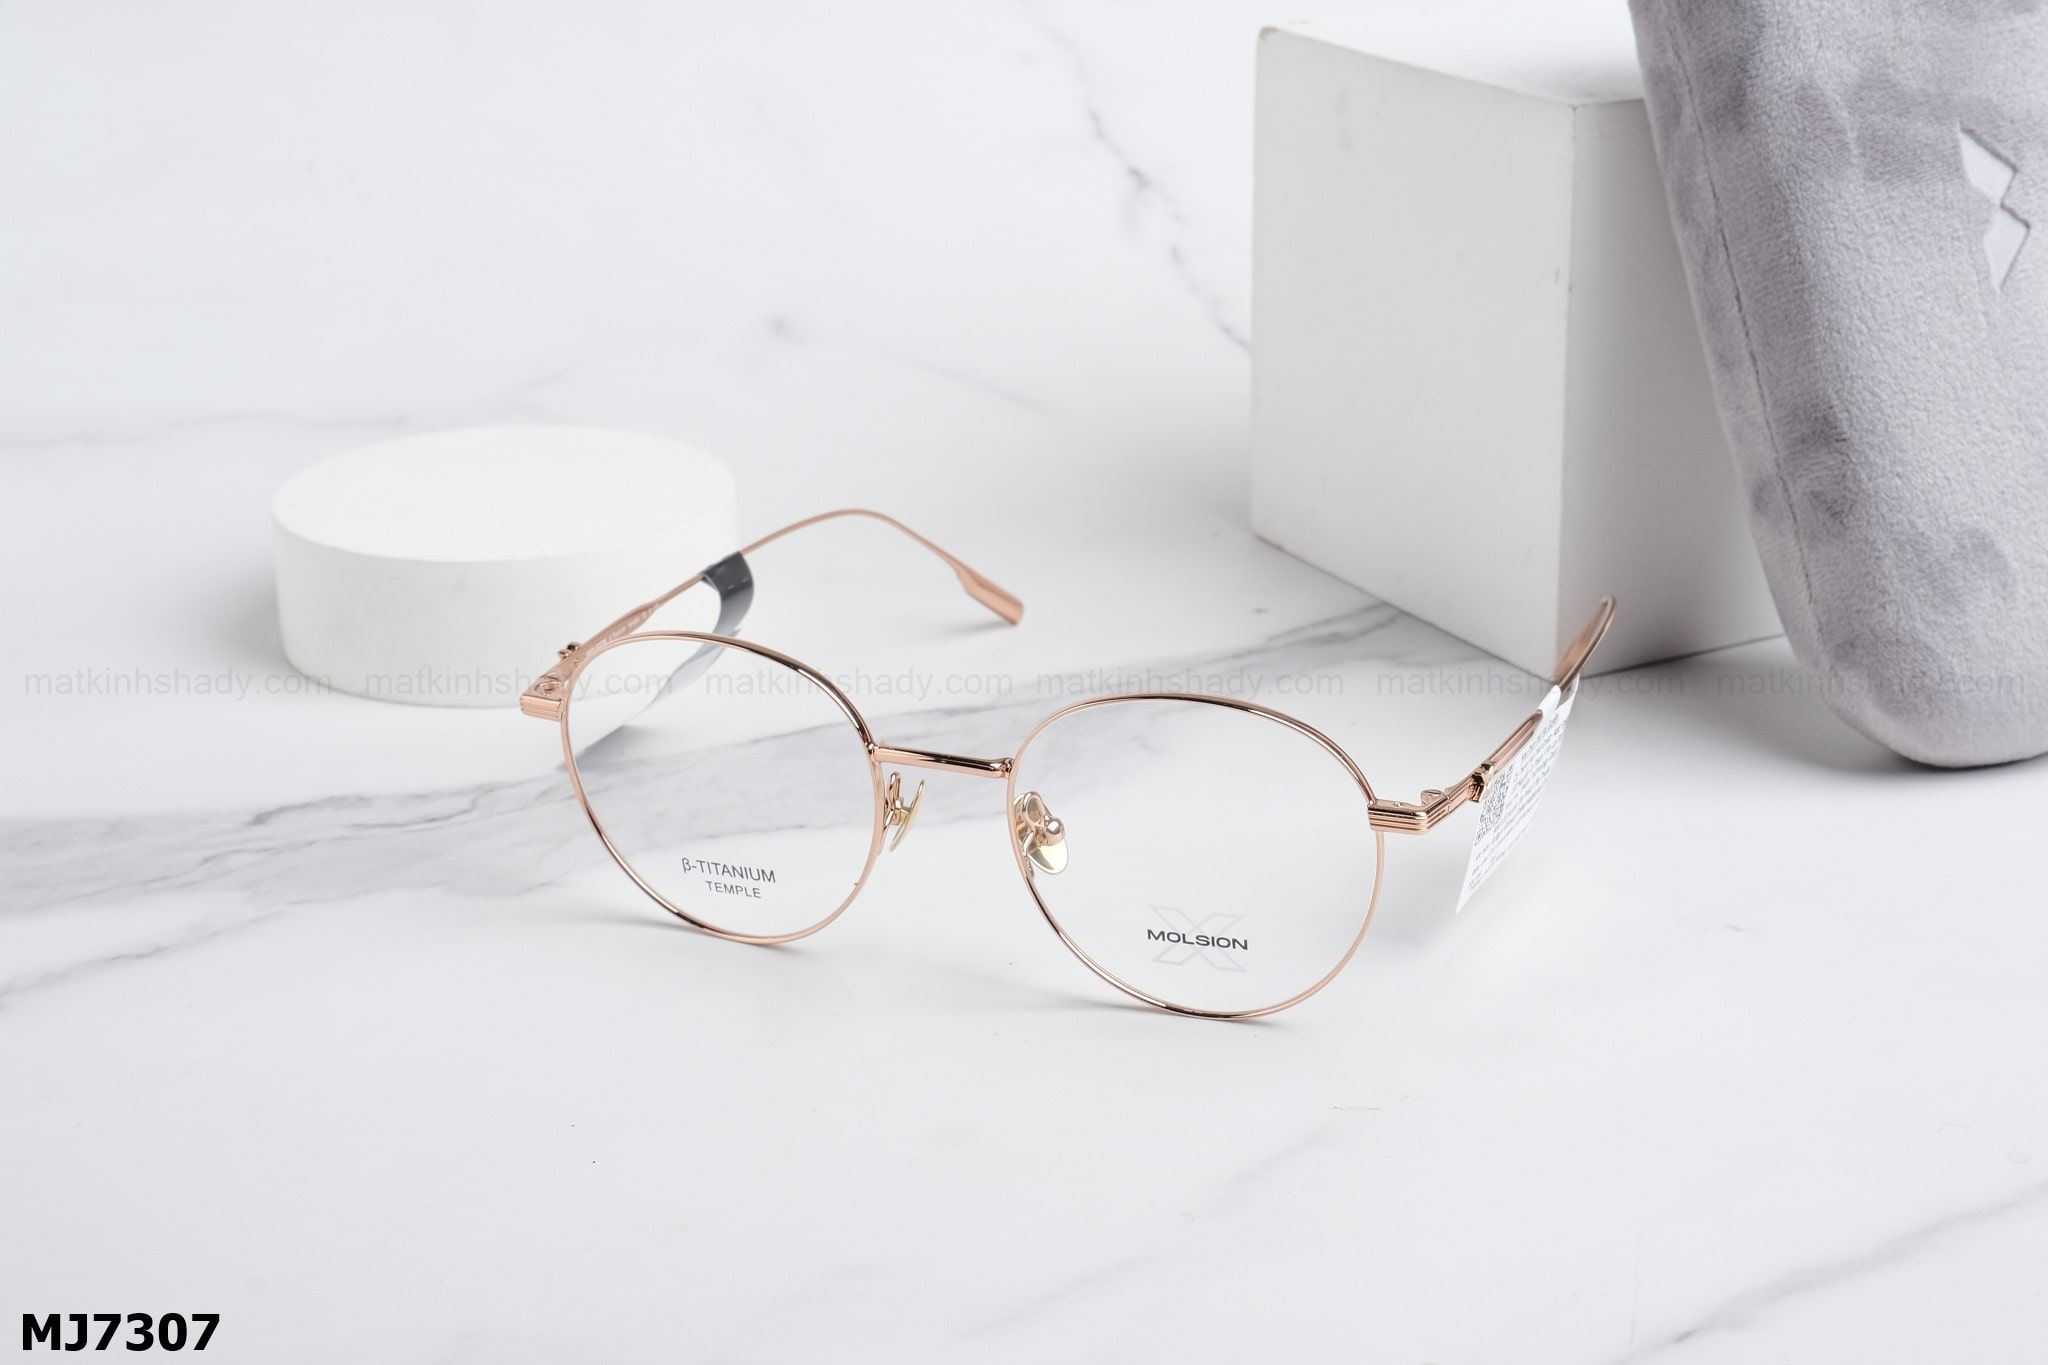  Molsion Eyewear - Glasses - MJ7307 